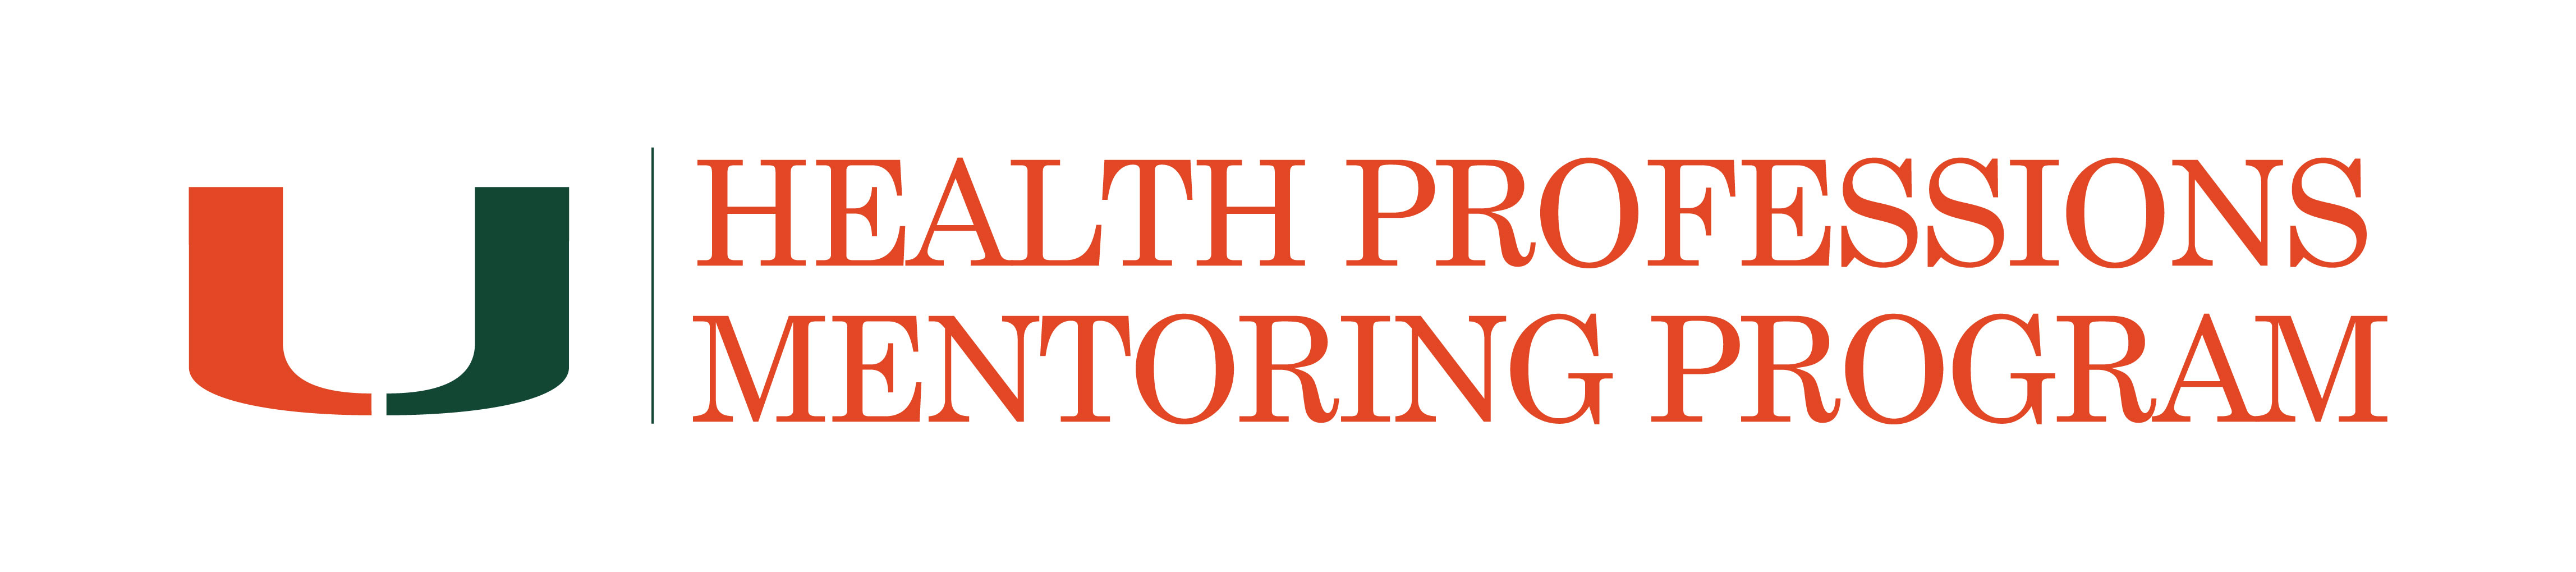 Health Professions Mentoring Logo Text